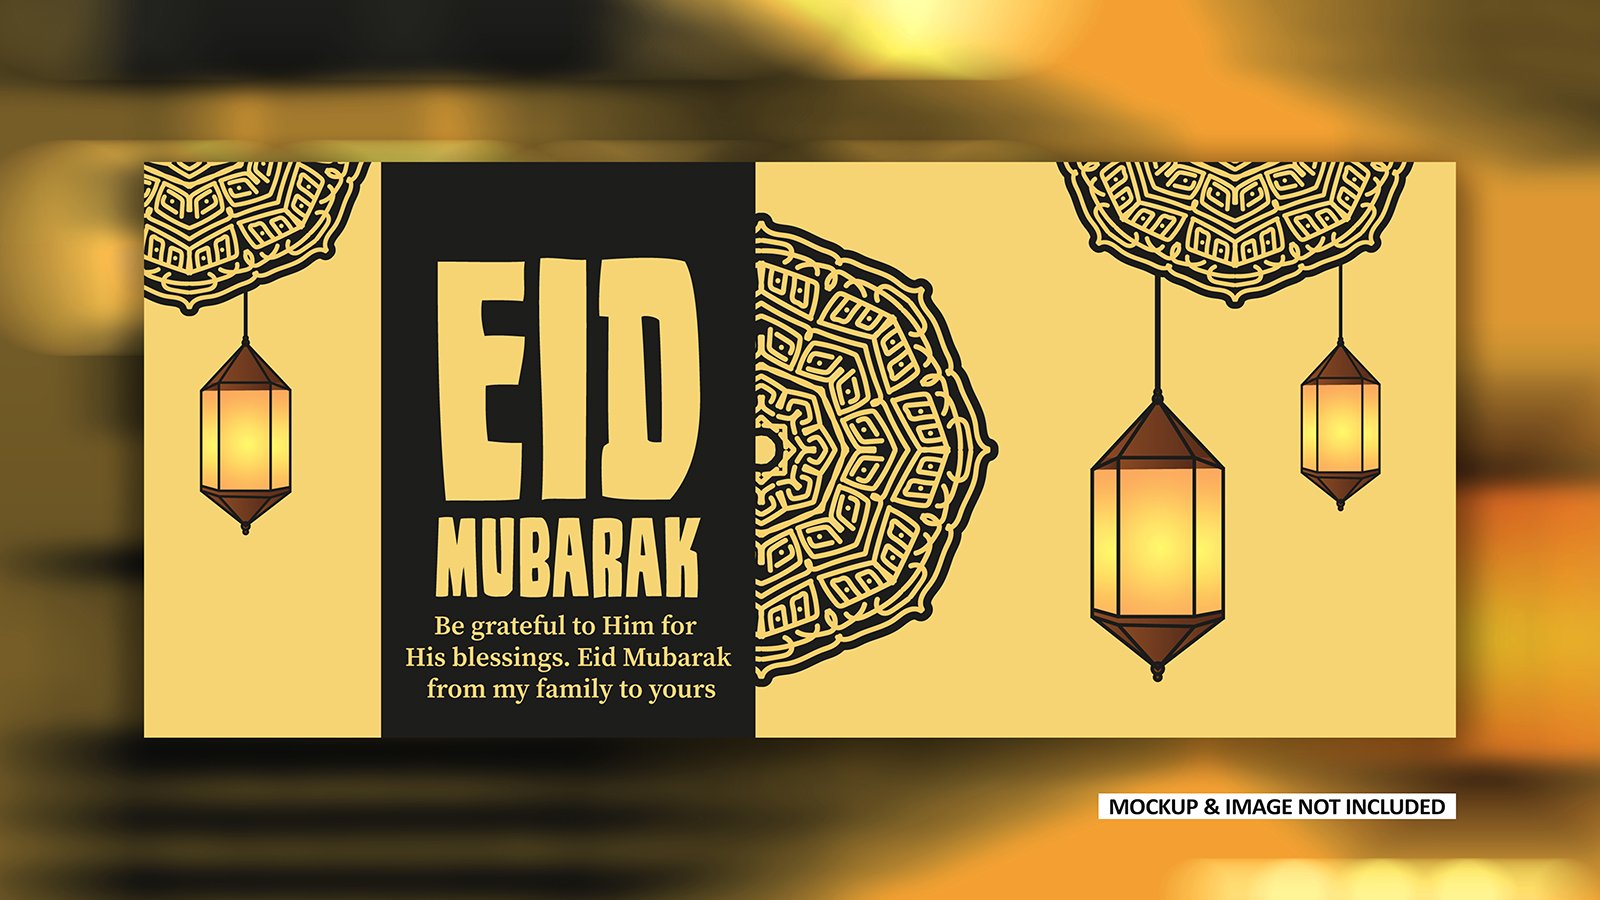 Premium Eid Mubarak greeting post design with bold mandala art, EPS vector design.